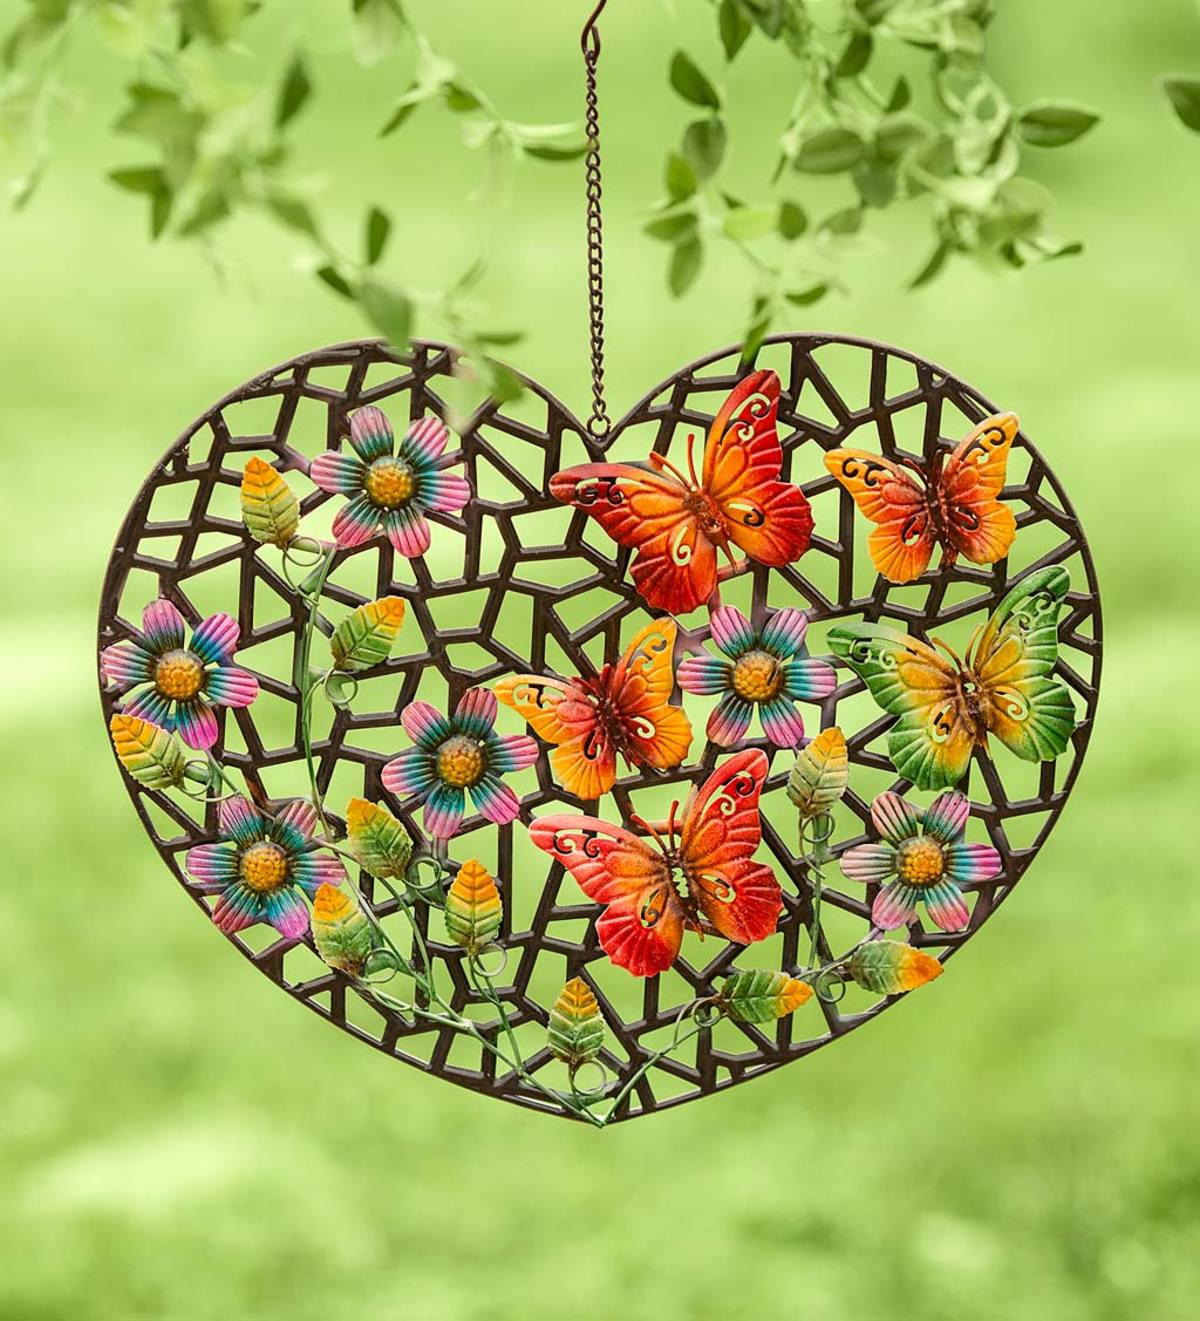 Hanging Metal Heart with Butterflies